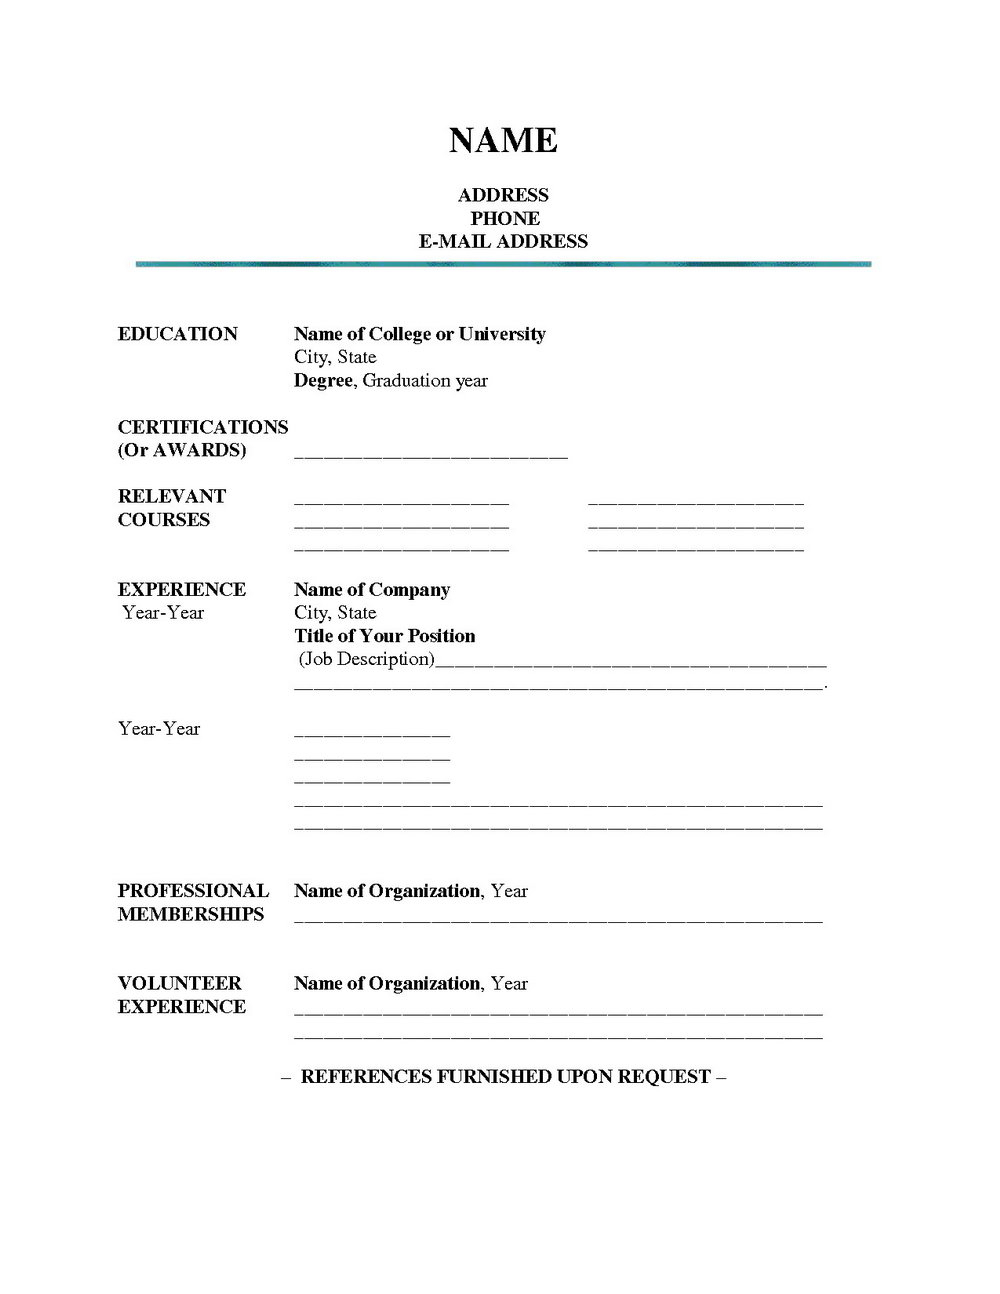 Free Blank Resume Form Printable | Mbm Legal - Free Blank Resume Forms Printable